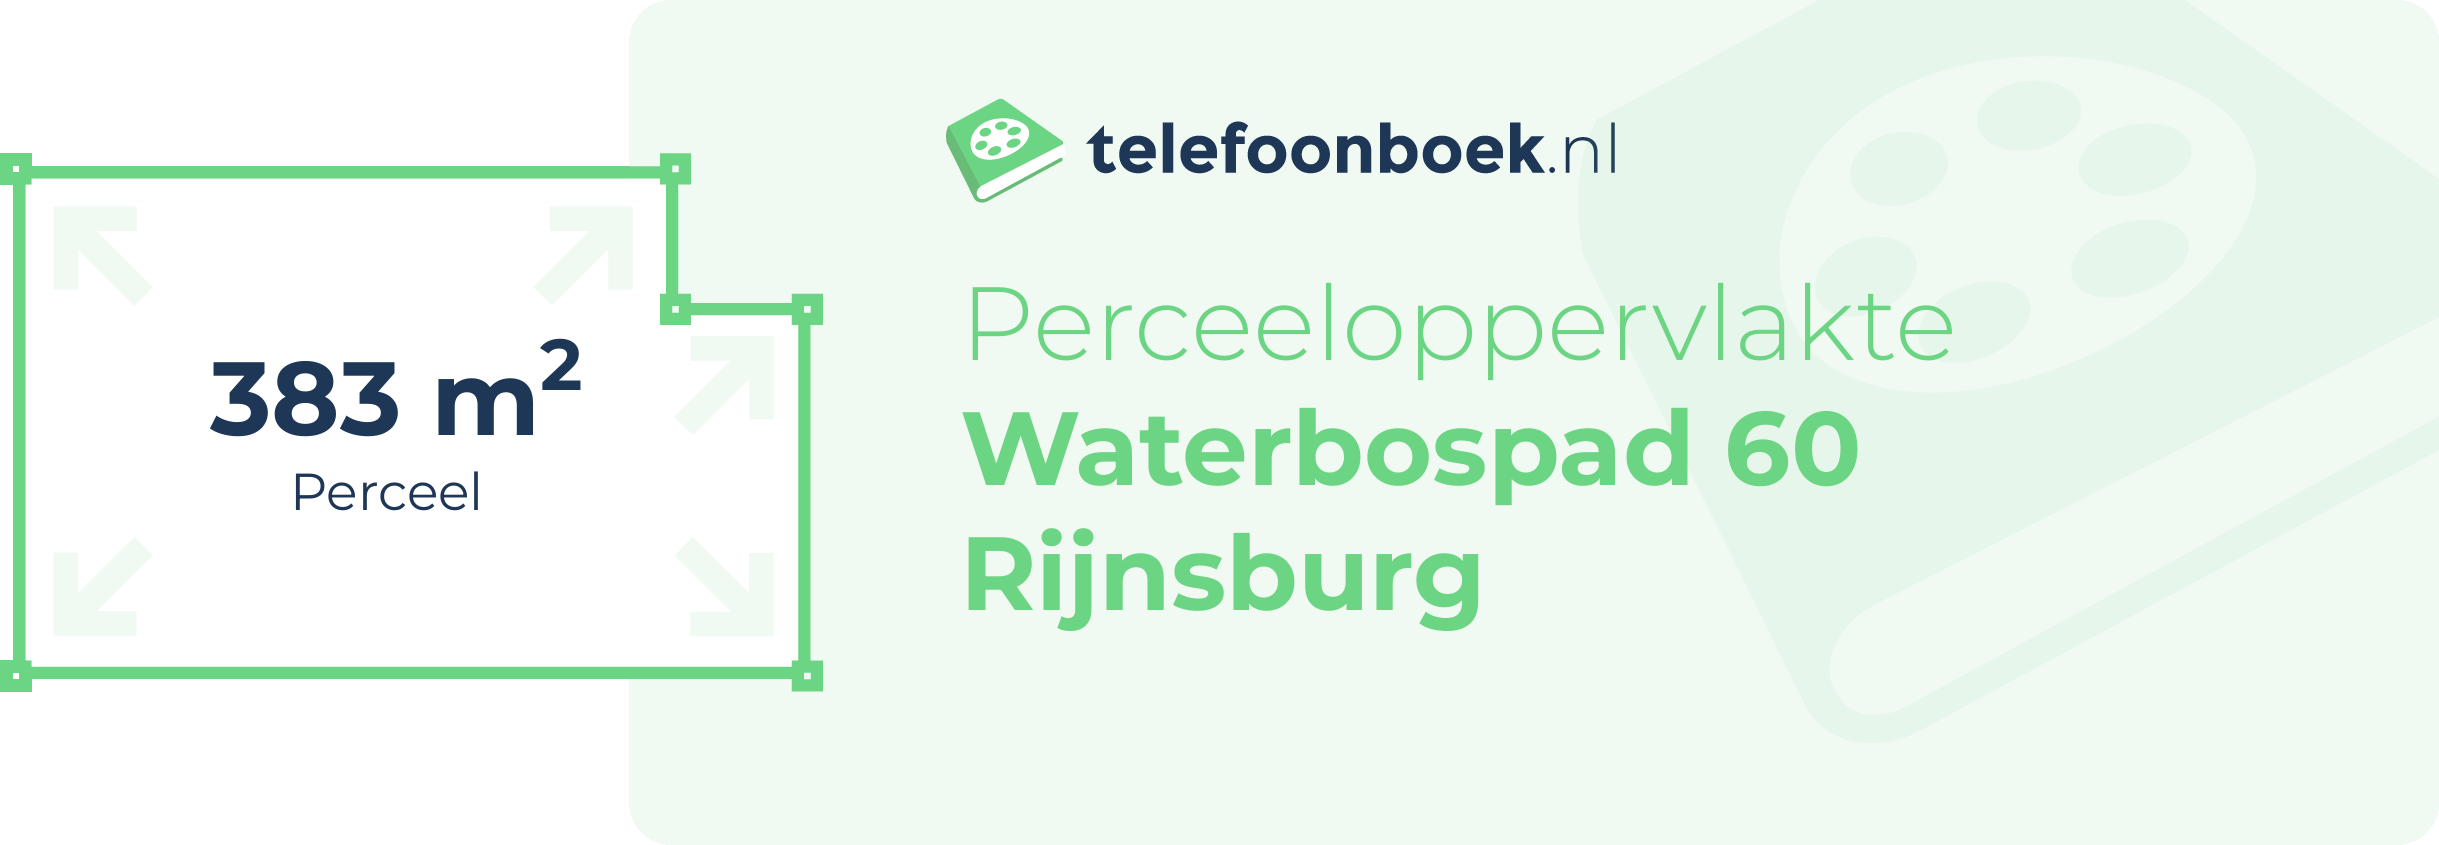 Perceeloppervlakte Waterbospad 60 Rijnsburg